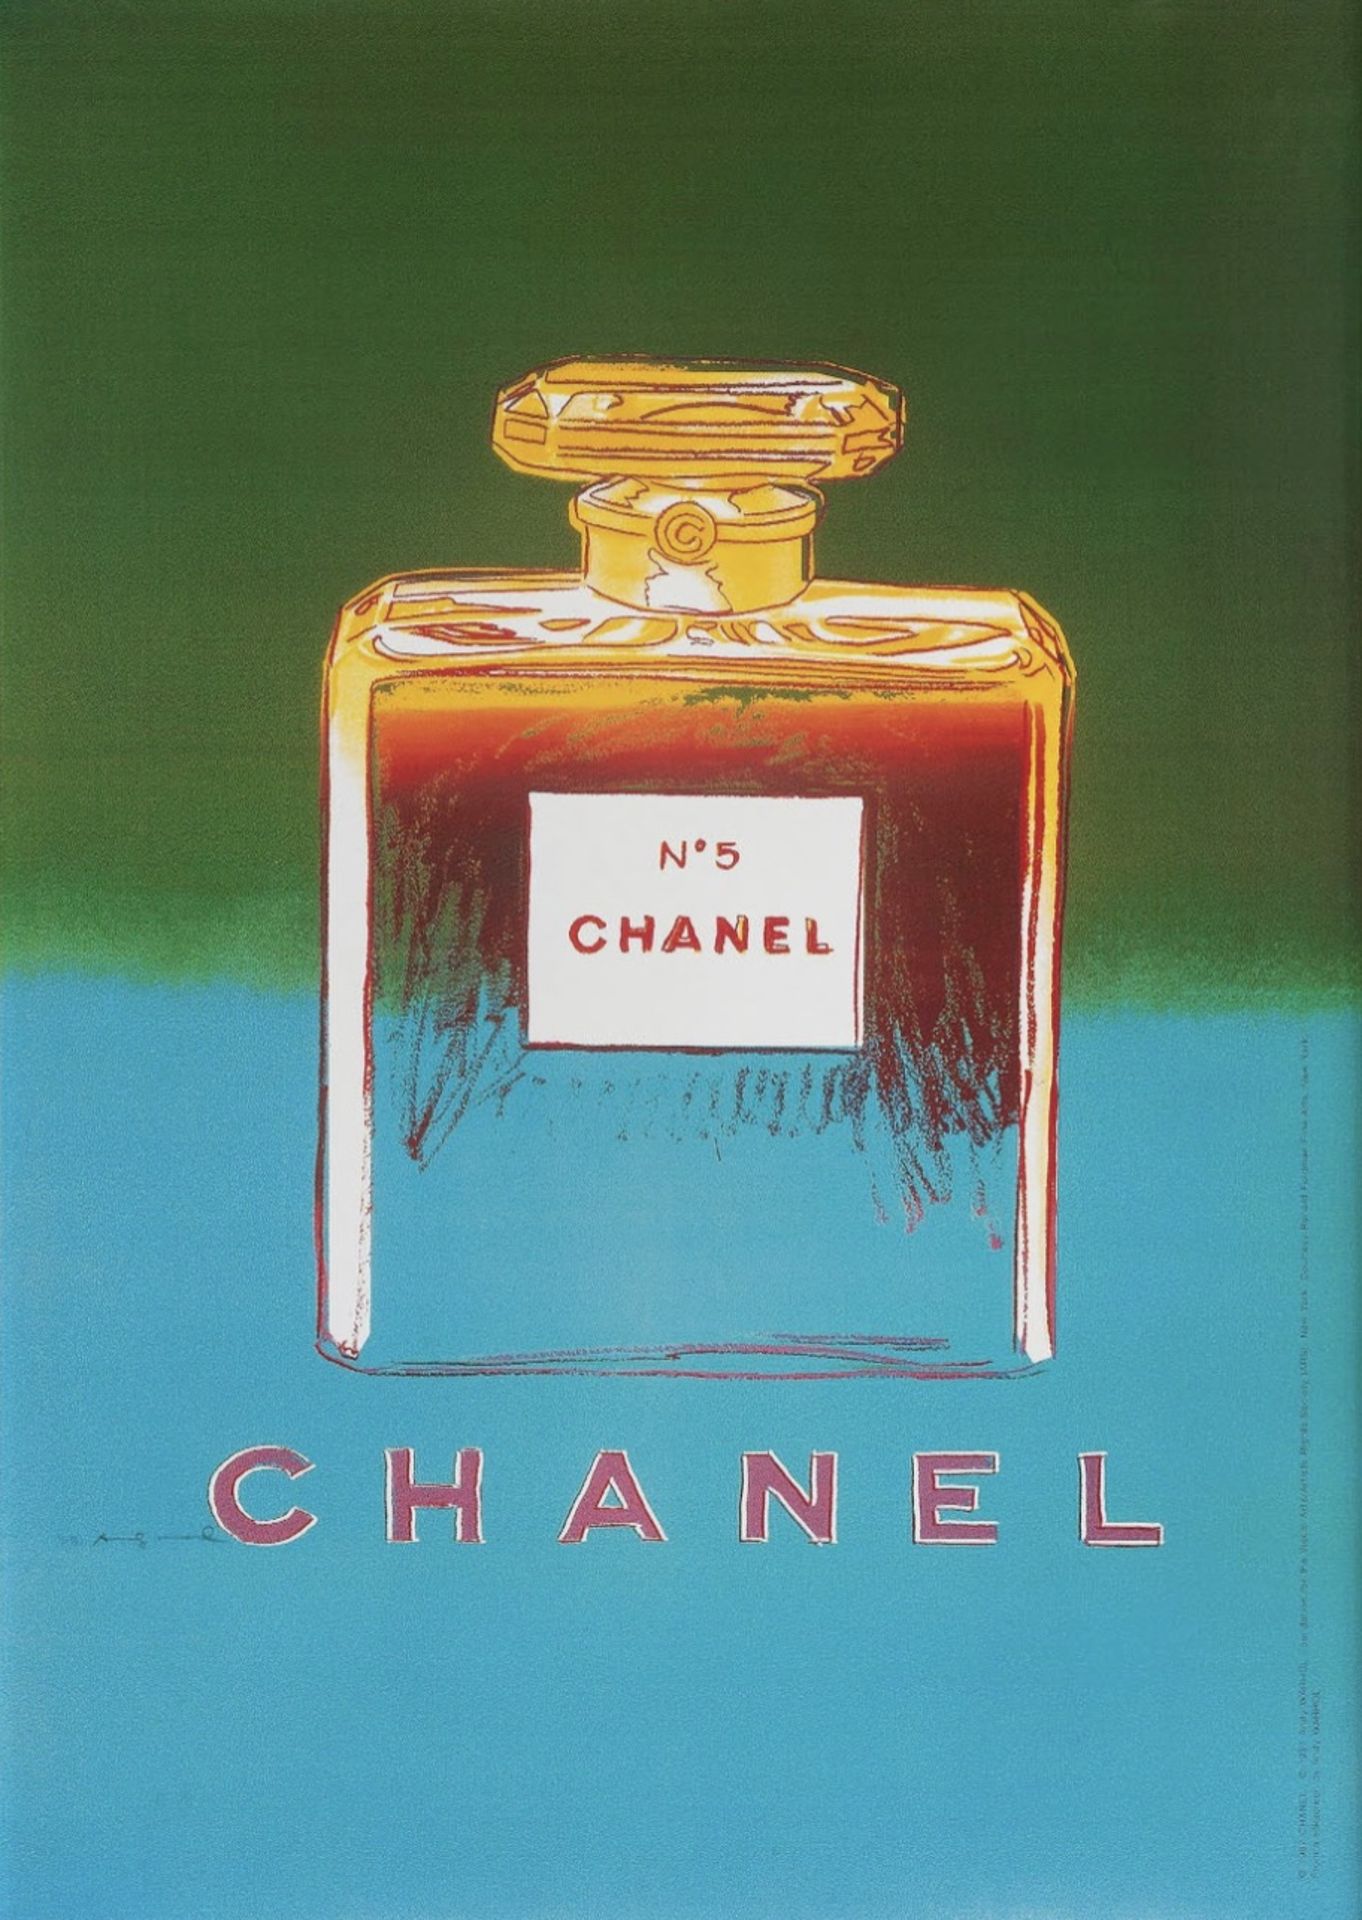 Andy Warhol "Chanel No.5" Print